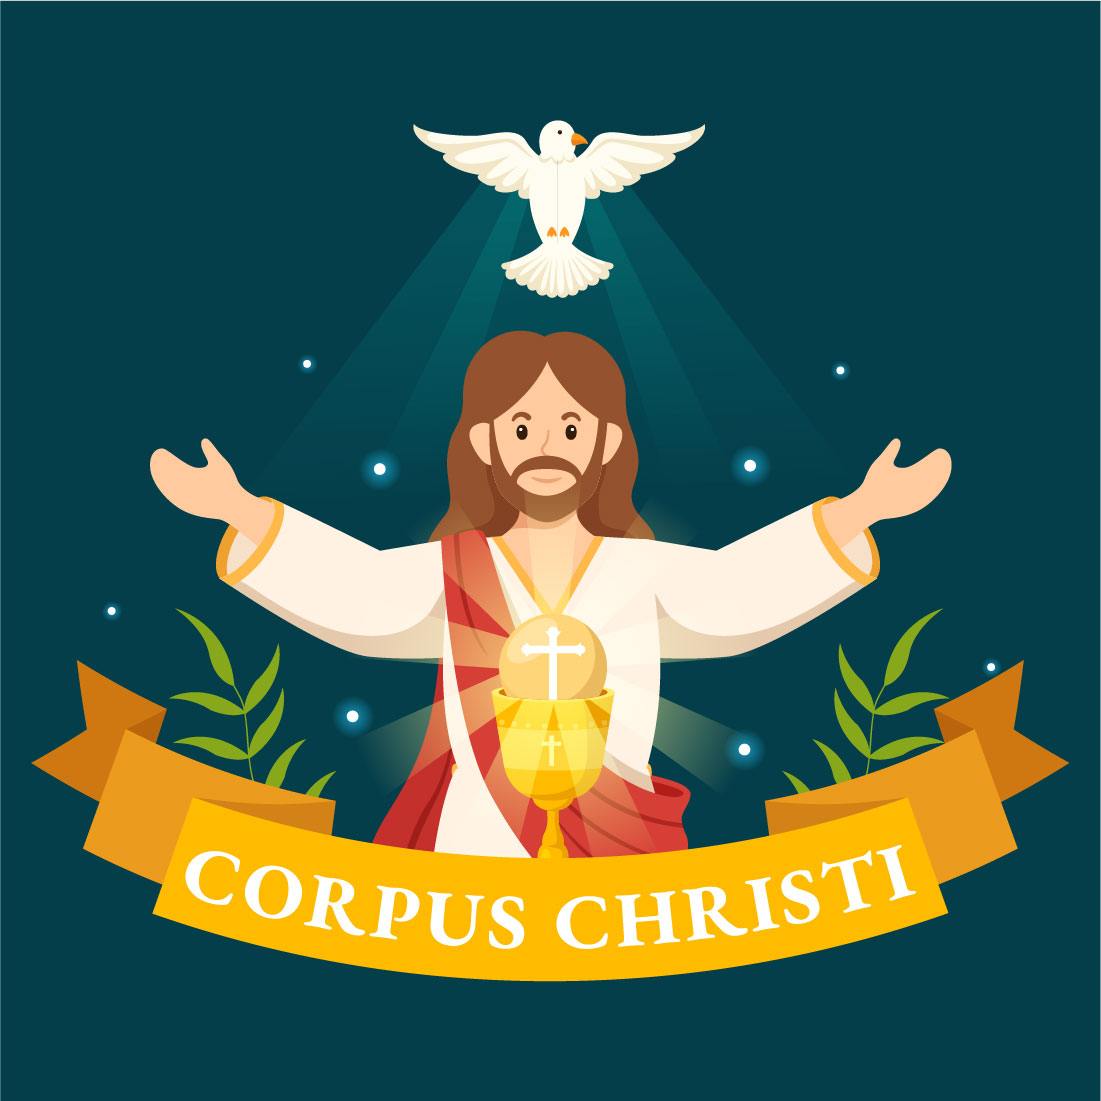 12 Corpus Christi Catholic Religious Illustration preview image.